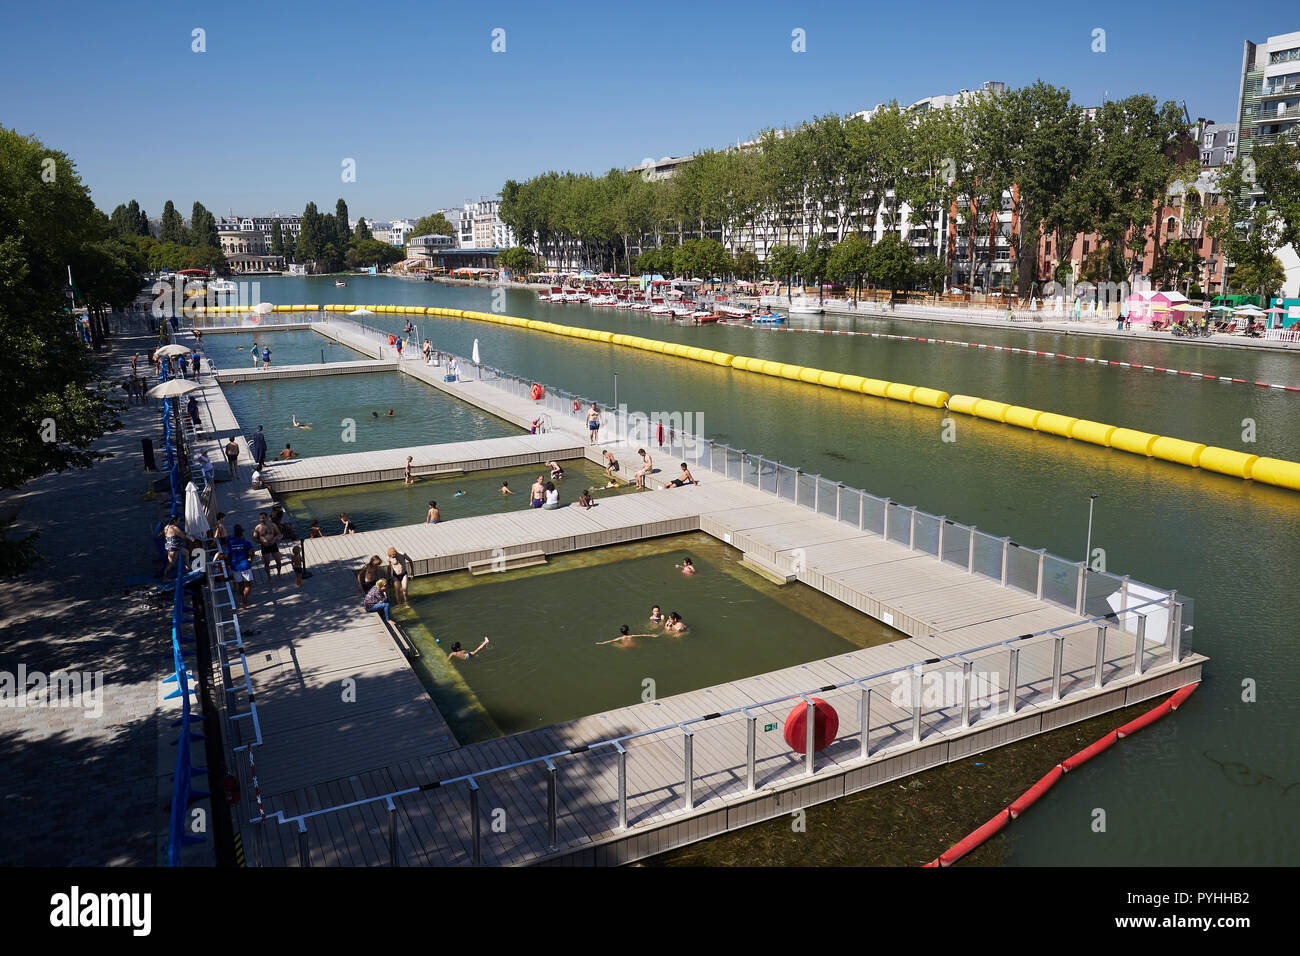 Paris, Ile-de-France, France - The summer river swimming pool in the Bassin de La Villette. Stock Photo